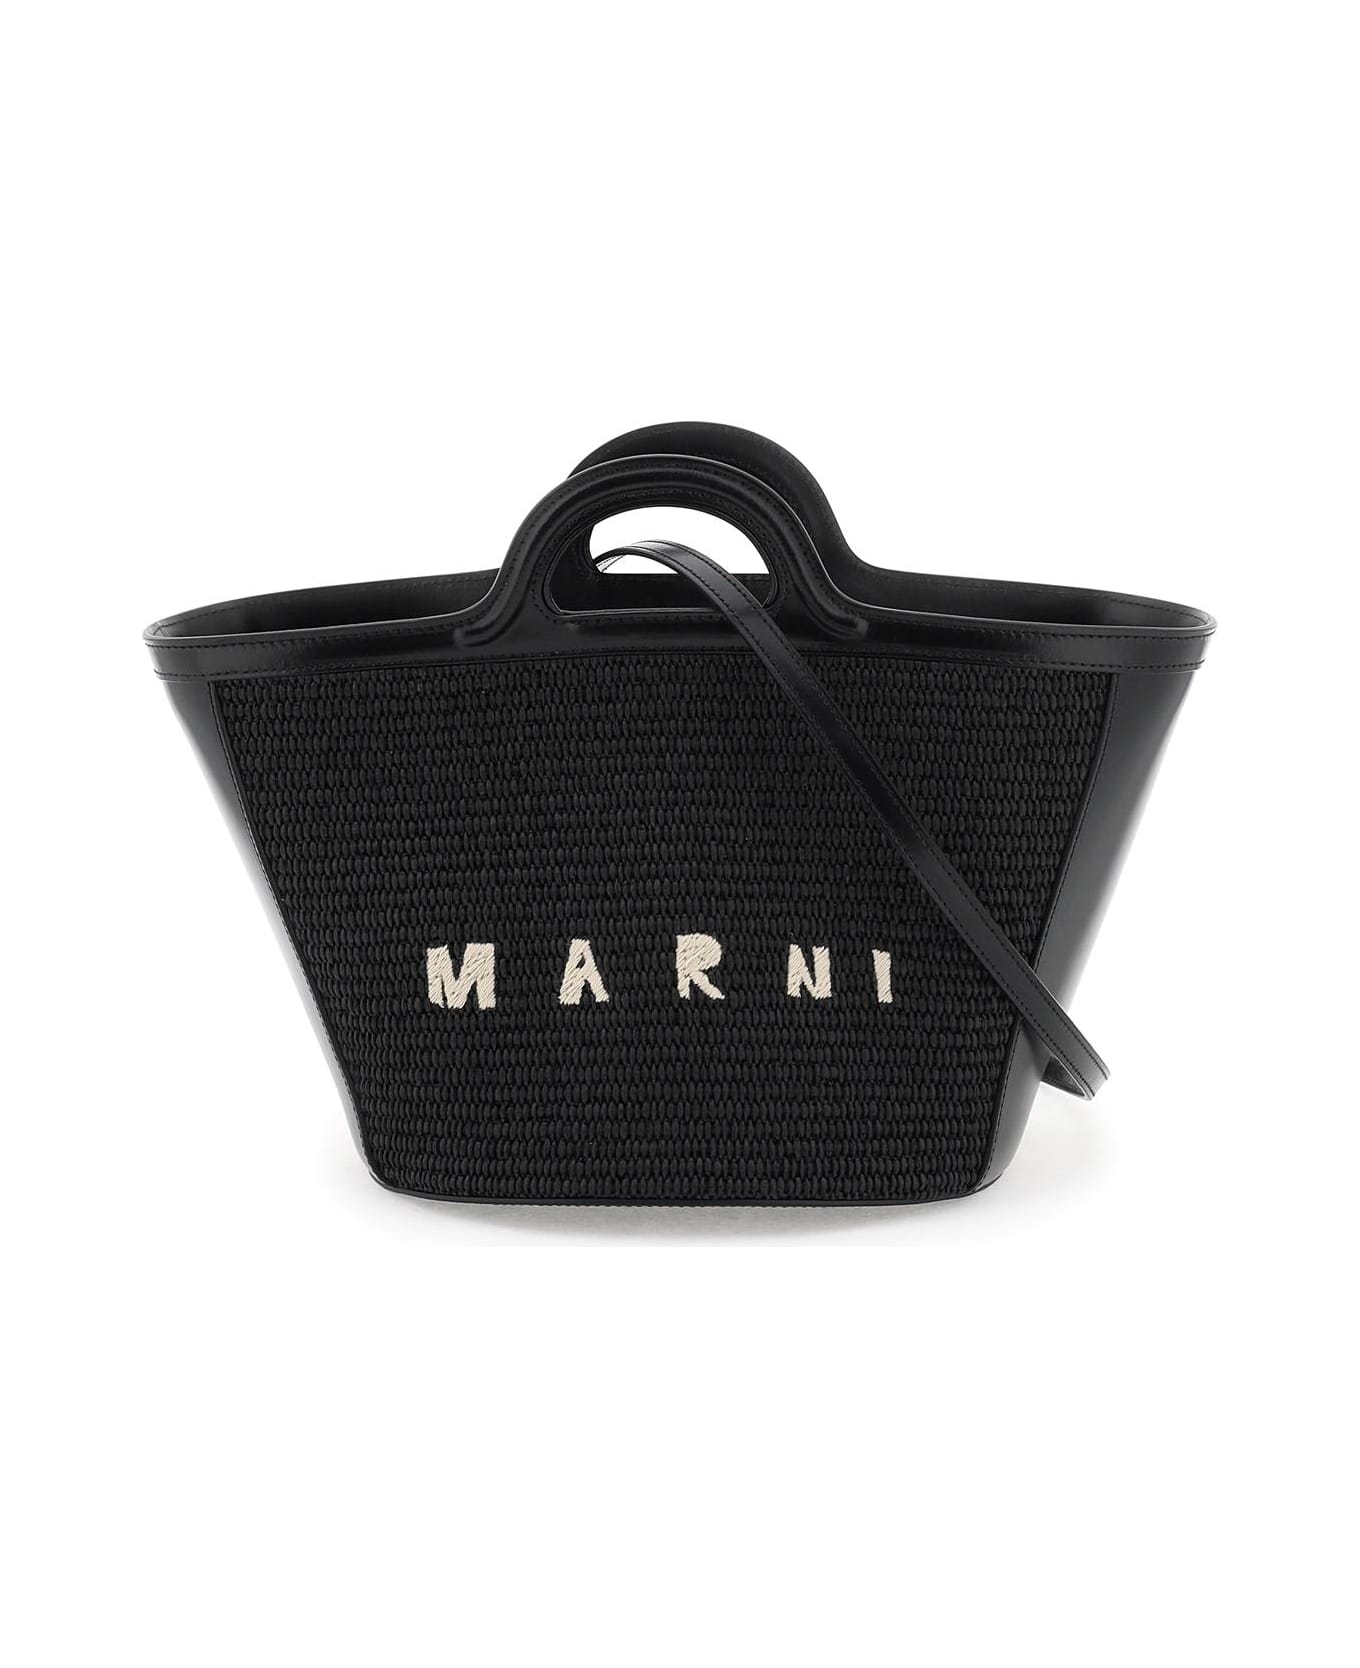 Marni 'tropicalia' Small Tote Bag - Black トートバッグ